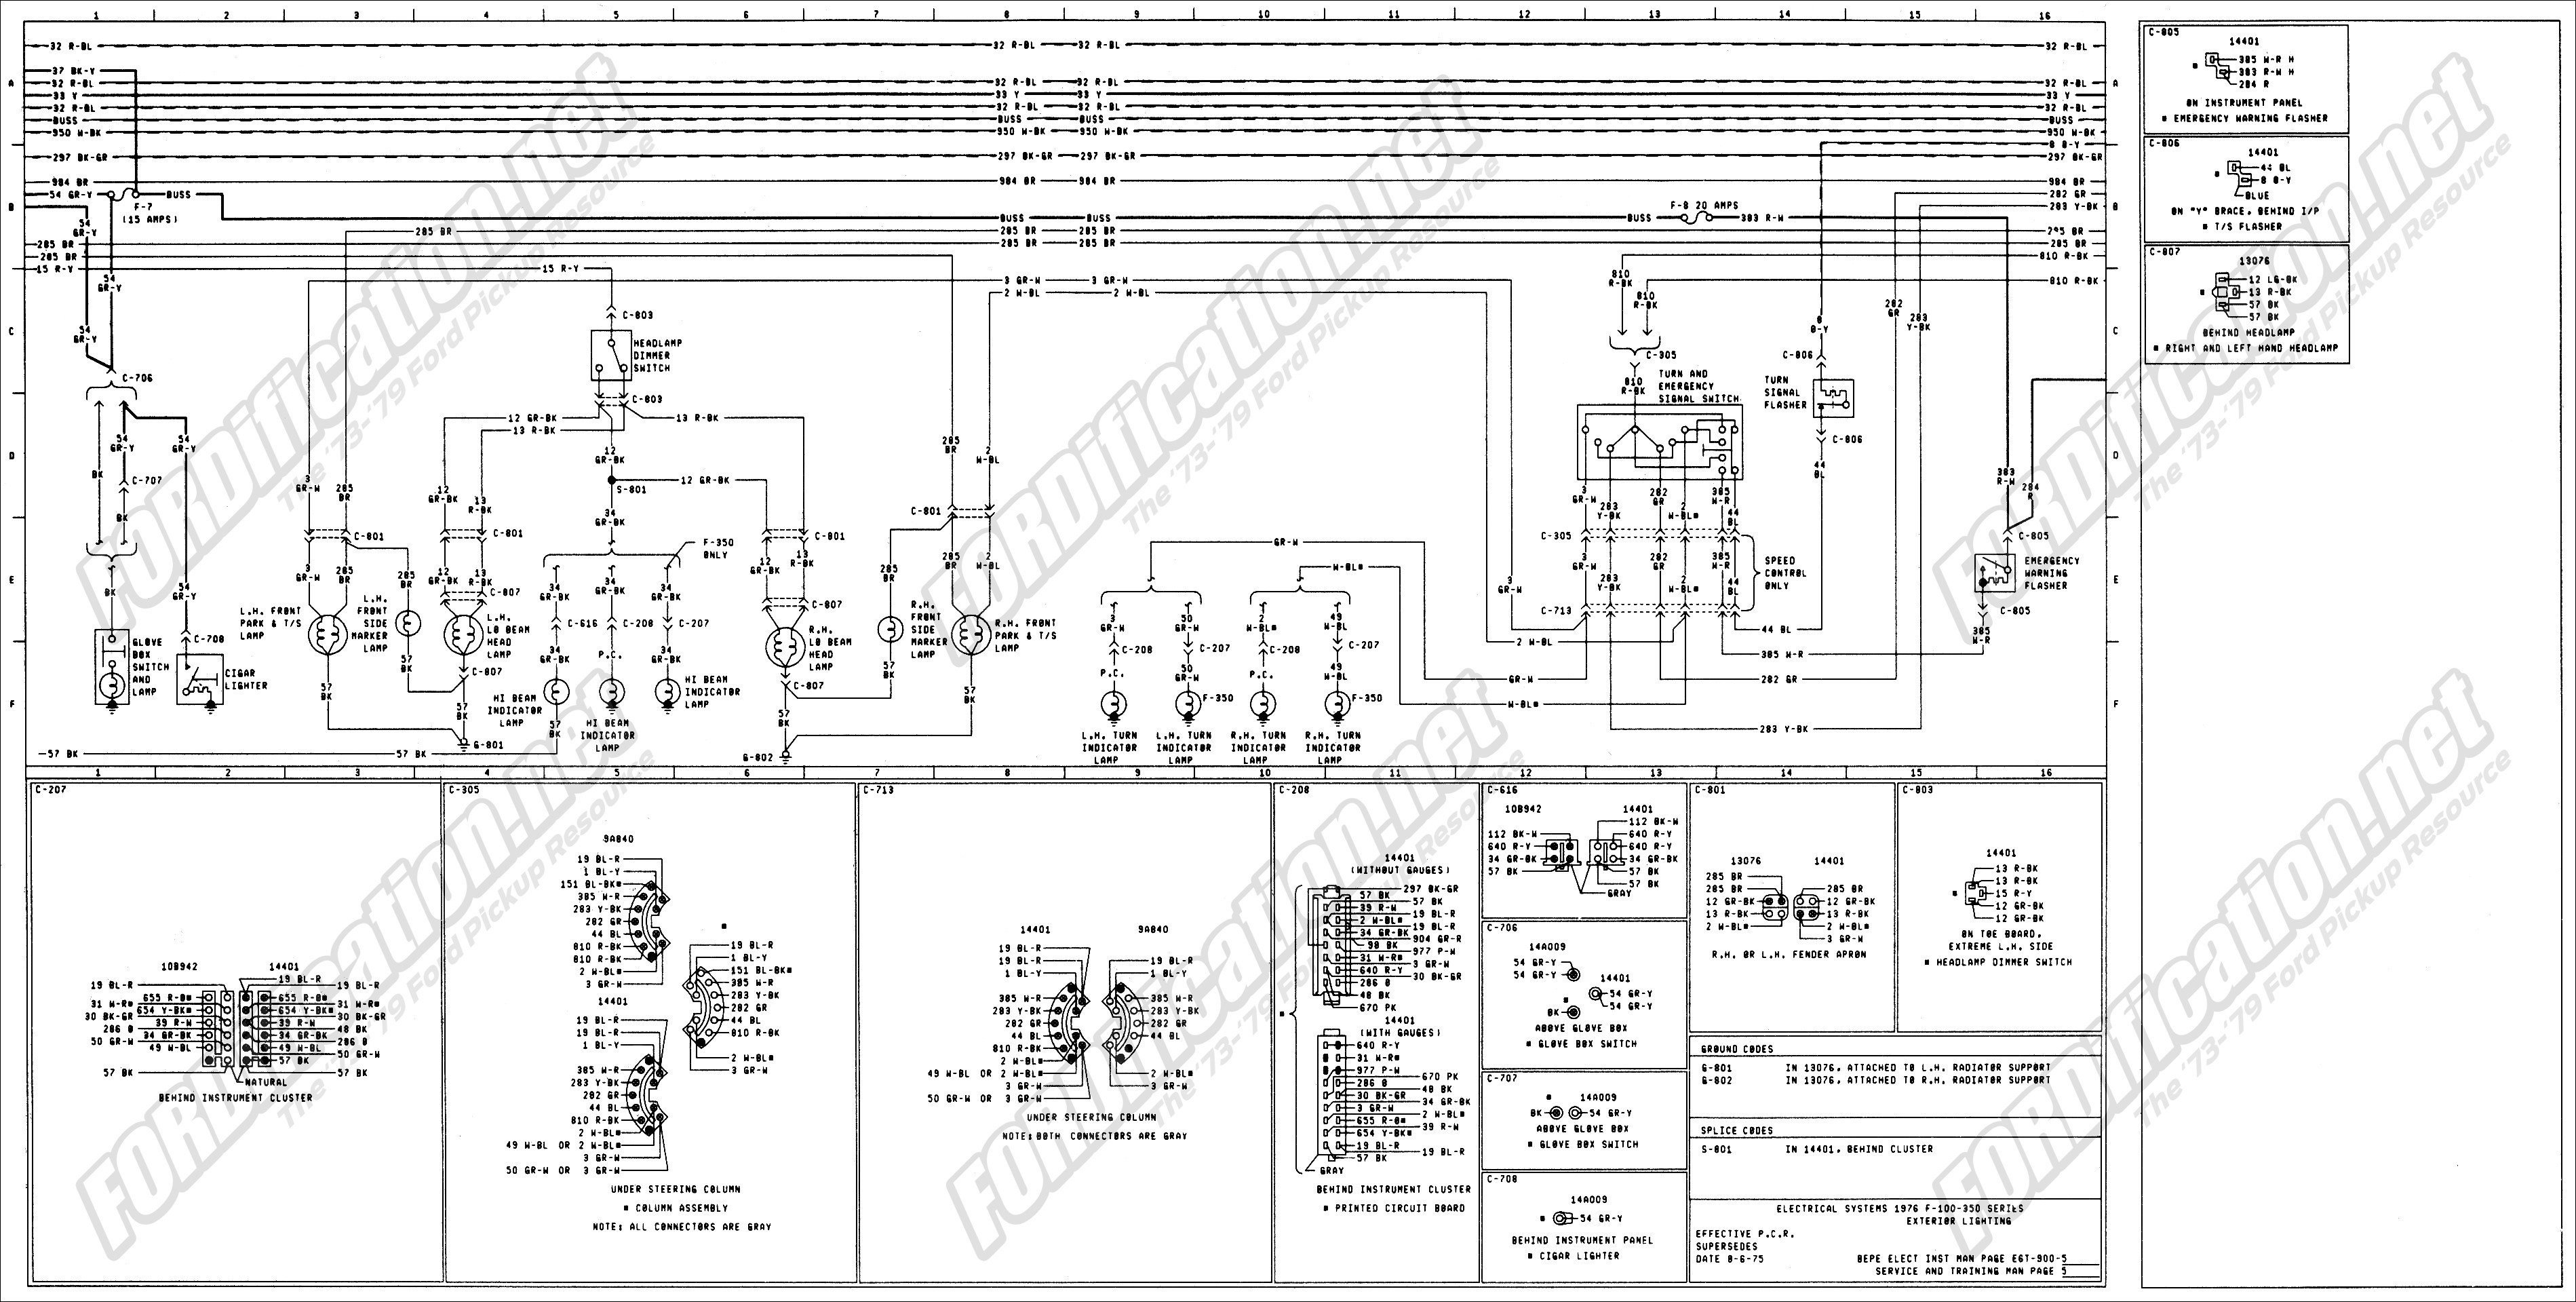 1986 ford F150 Engine Wiring Diagram 1986 ford Truck Wiring Diagram Trusted Wiring Diagram Of 1986 ford F150 Engine Wiring Diagram